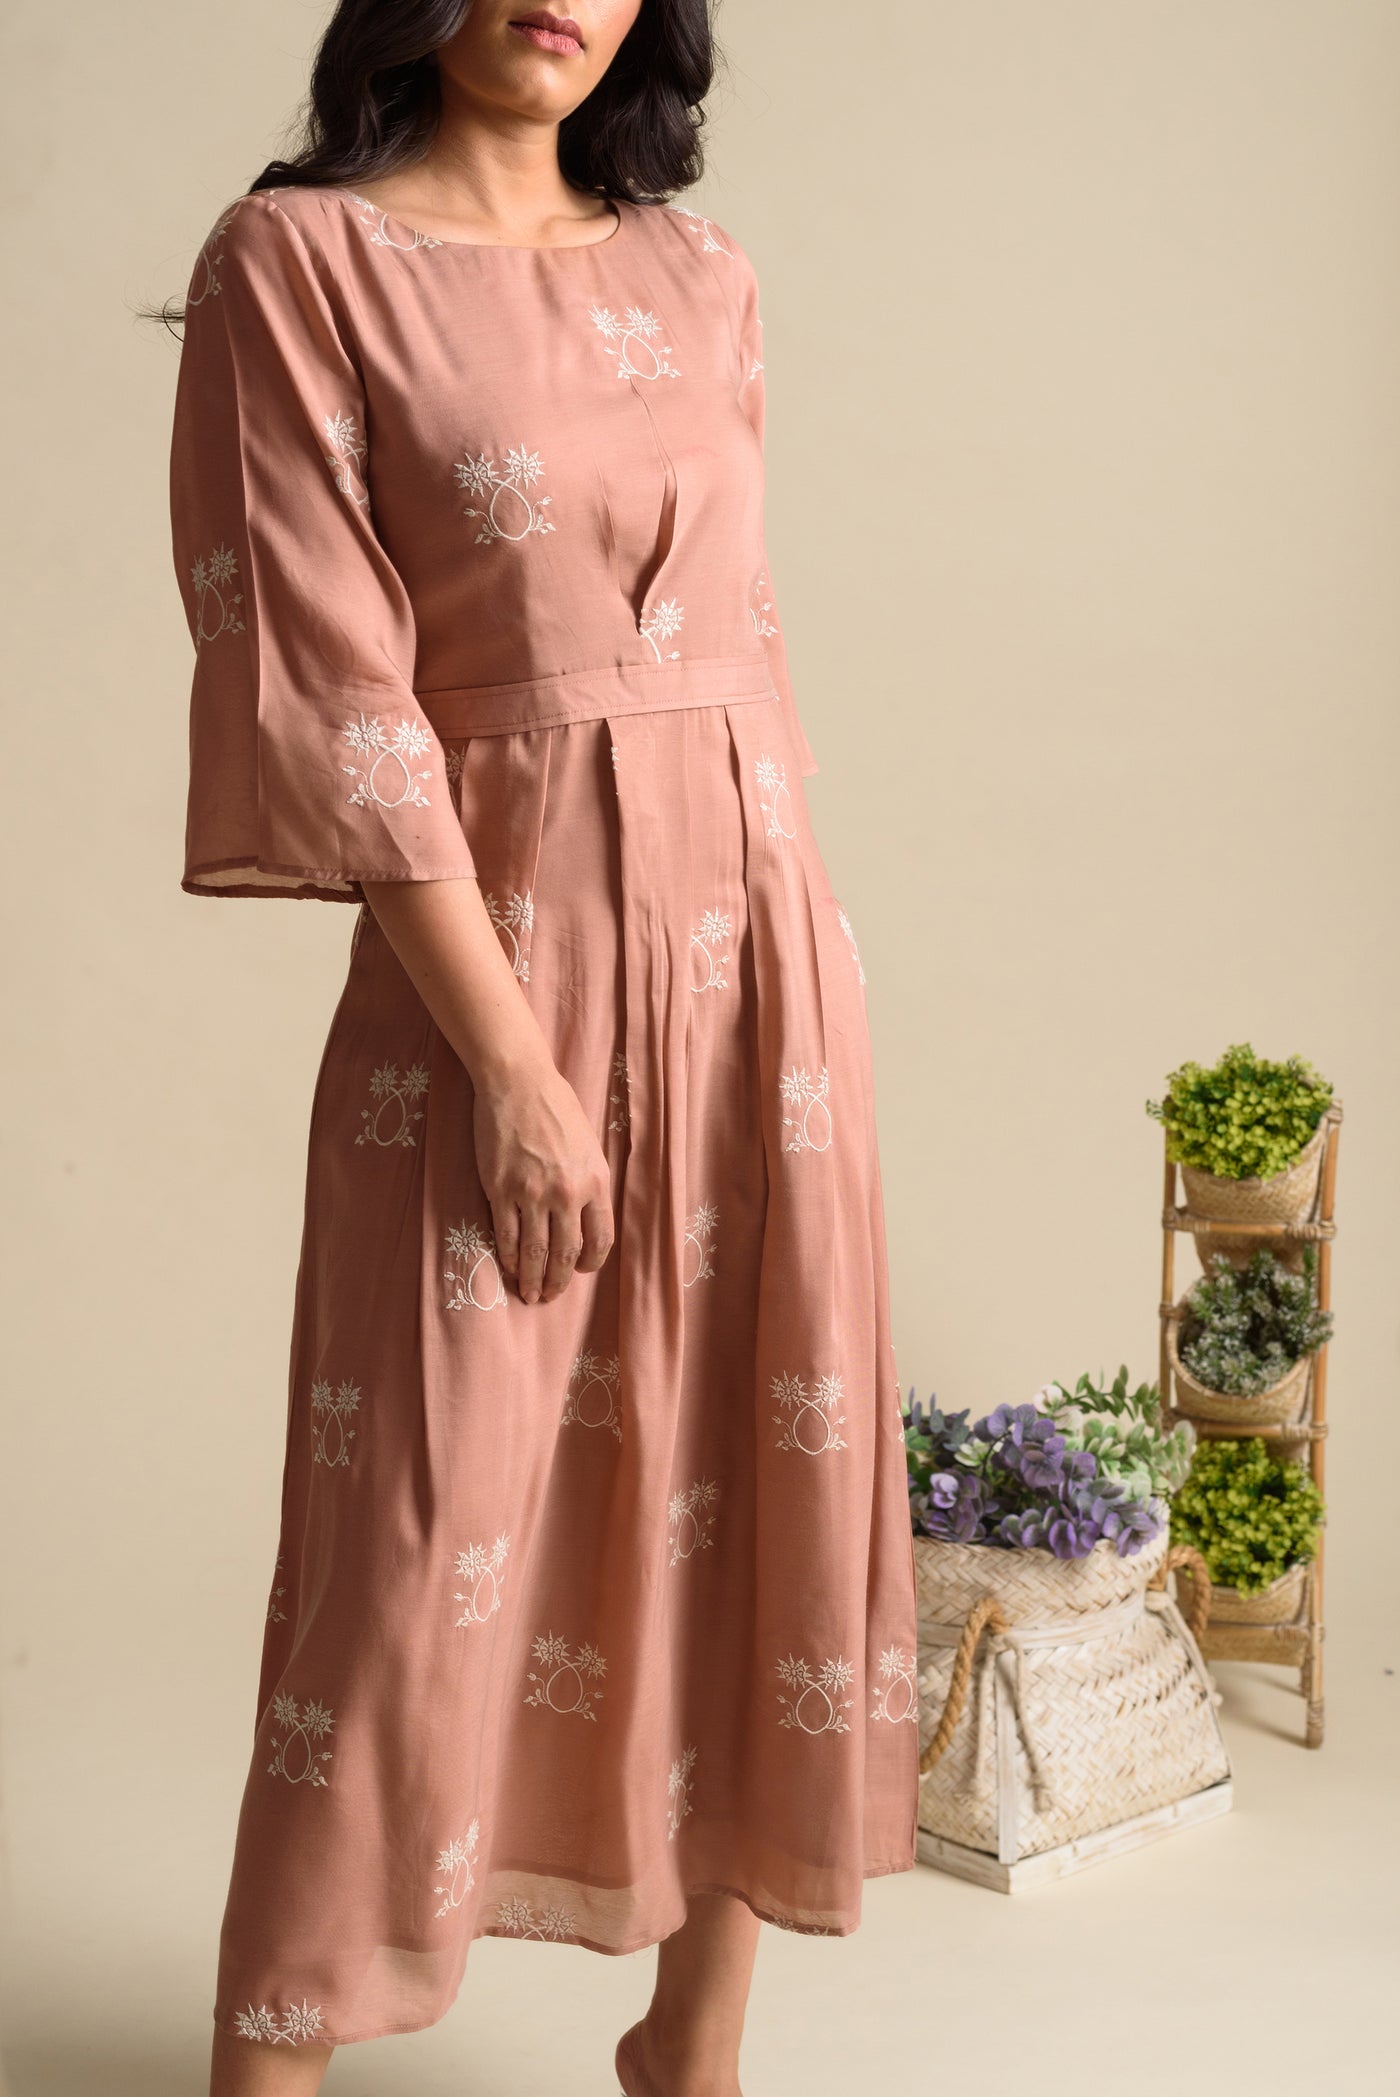 ROSE ORANGE DRESS